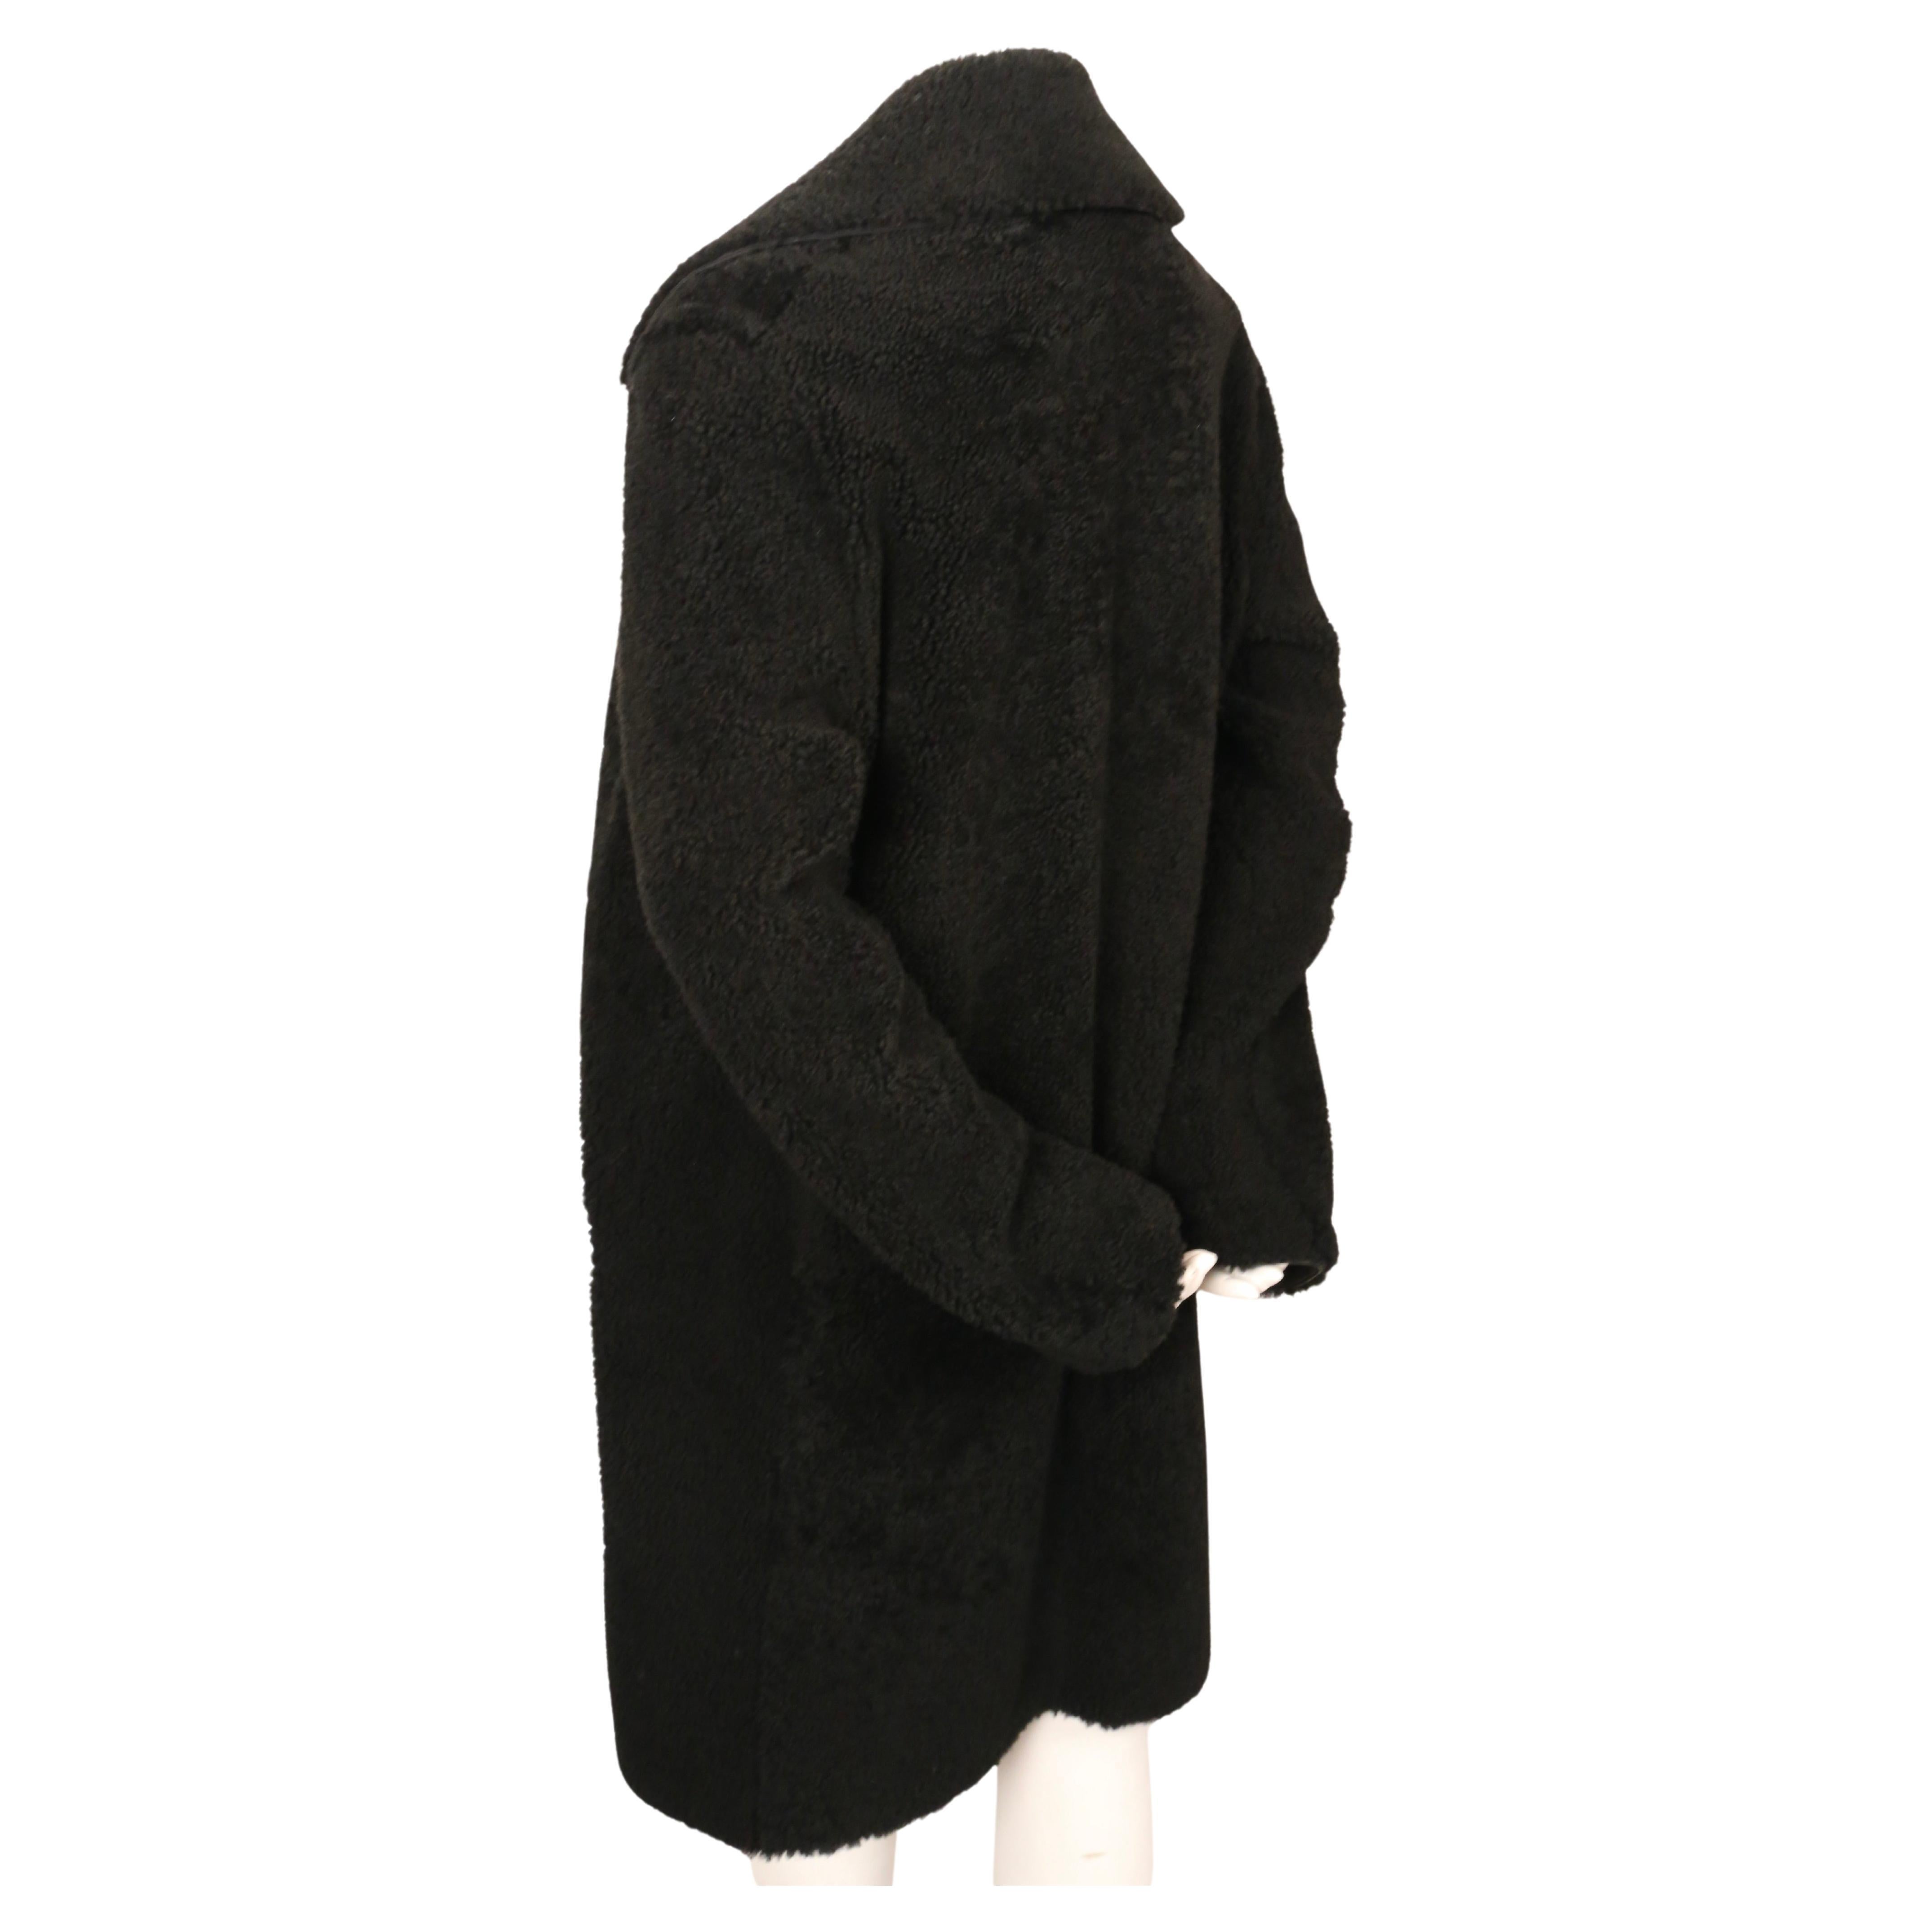 CELINE by PHOEBE PHILO black shearling coat For Sale 1